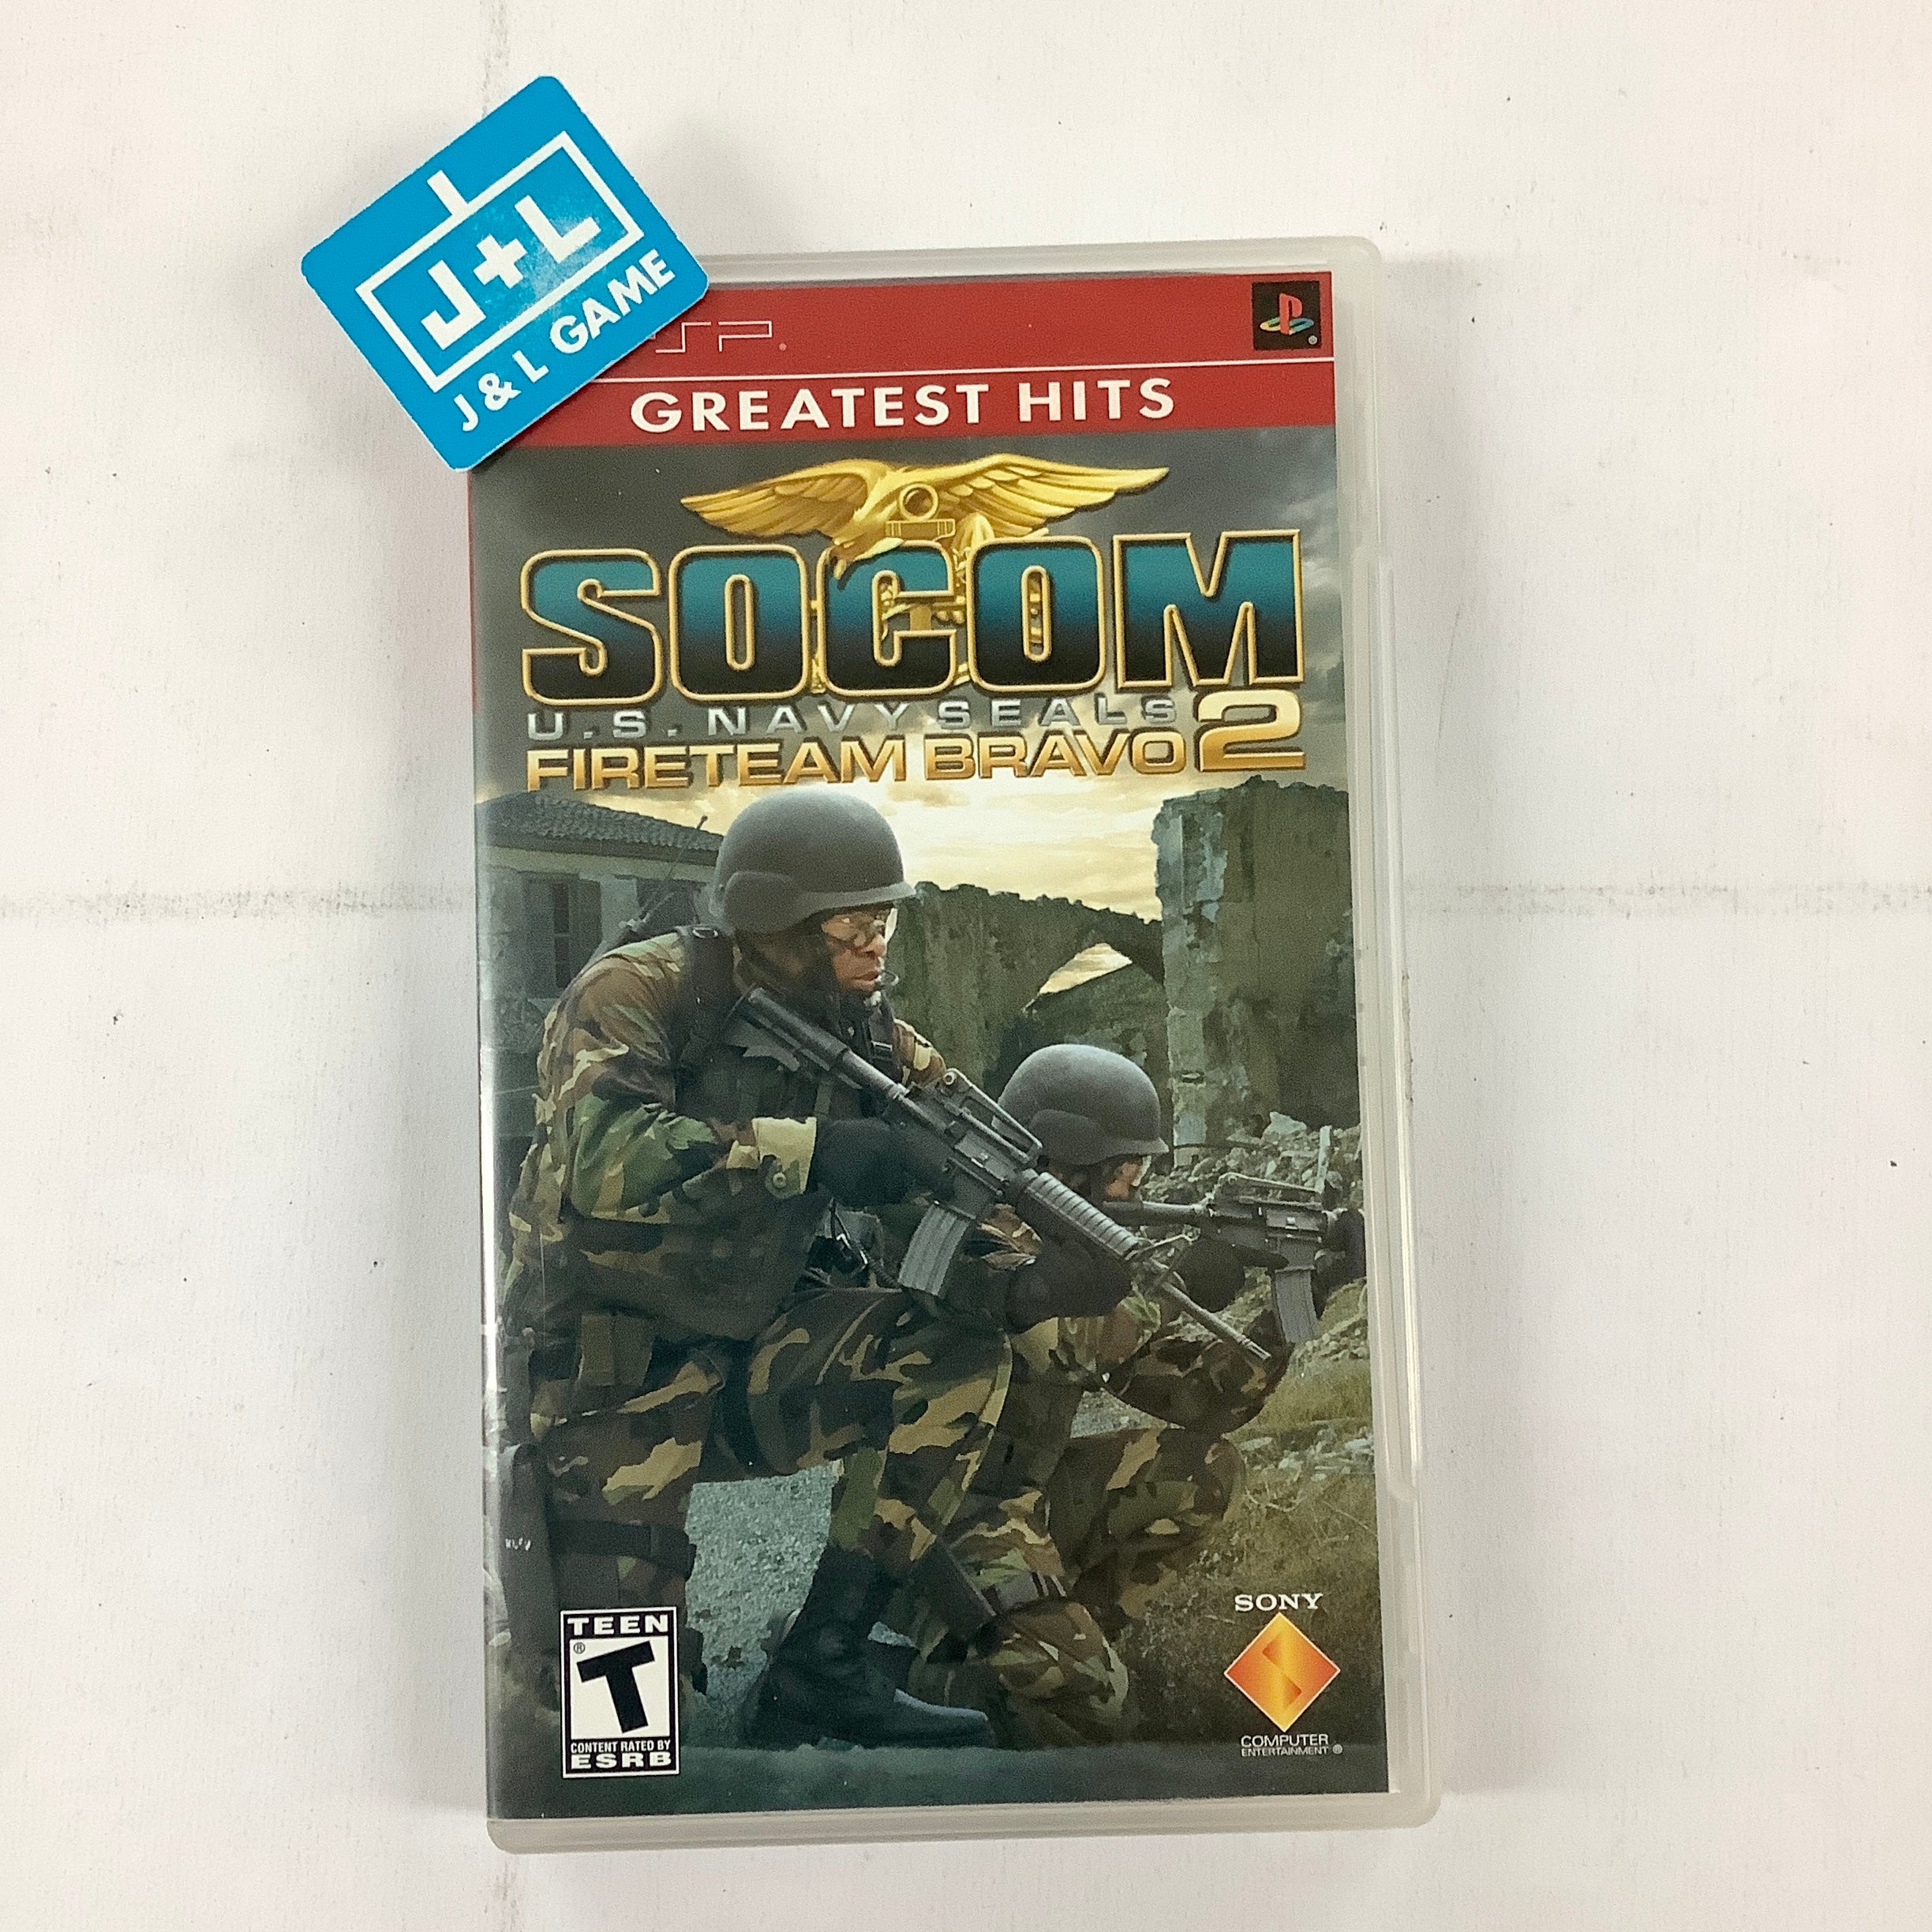 SOCOM: U.S. Navy SEALs Fireteam Bravo 2 (Greatest Hits) - Sony PSP